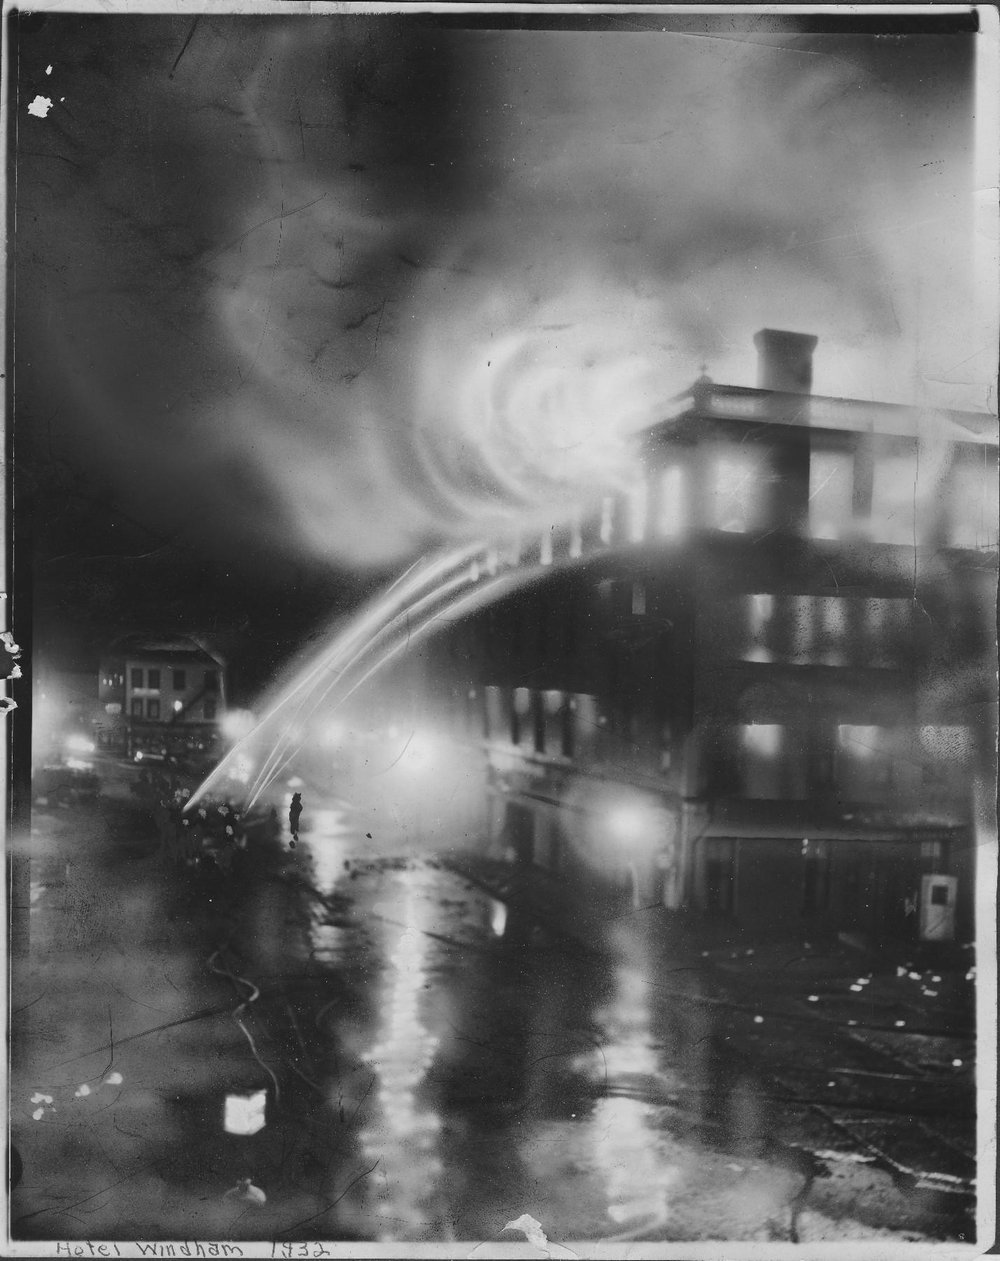 Hotel Windham Fire 1932